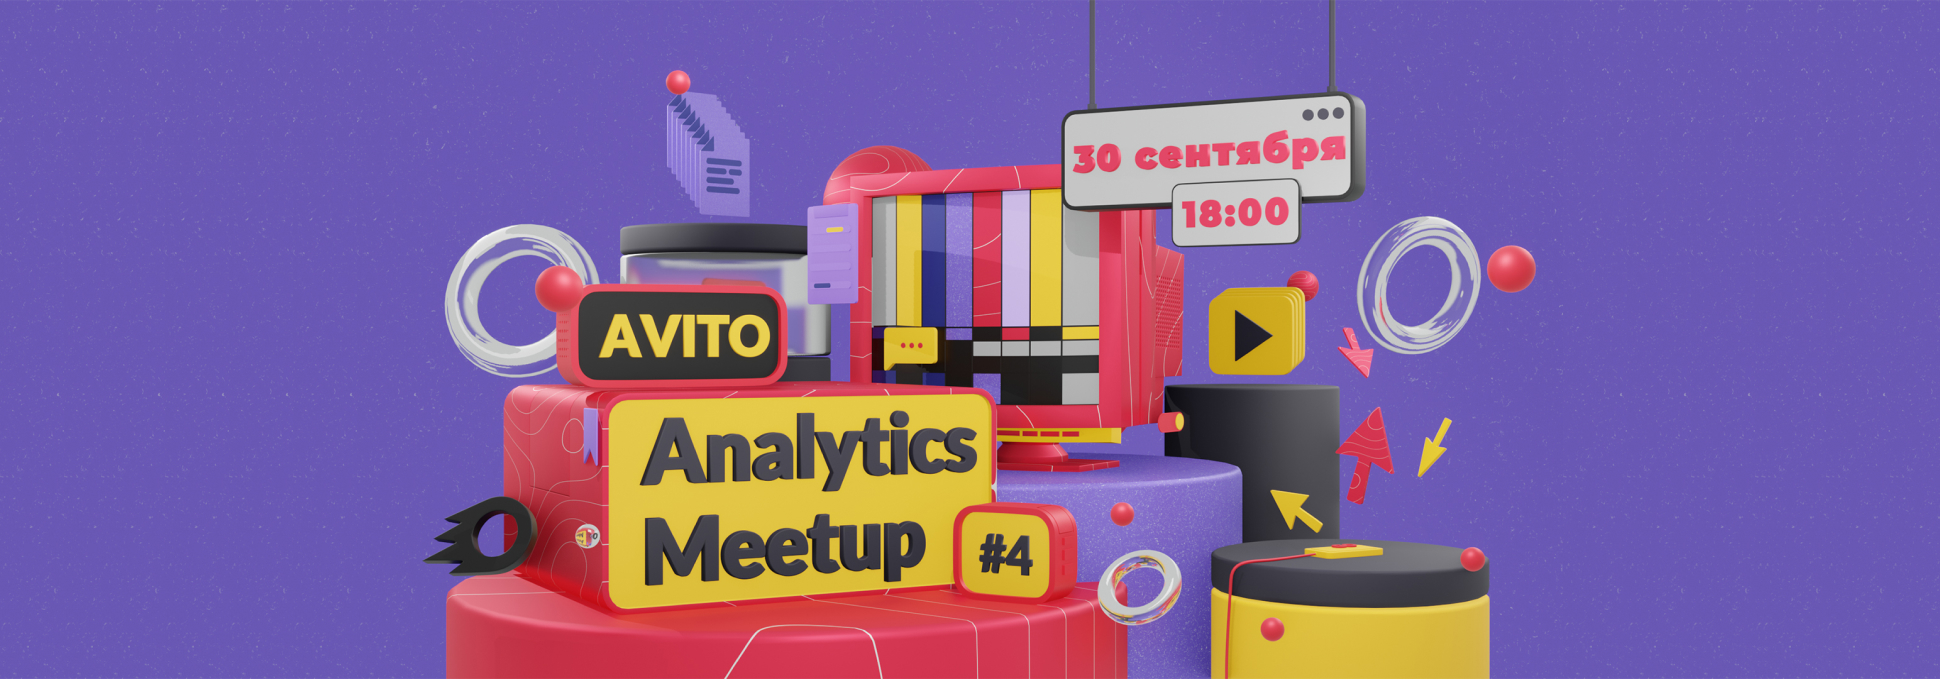 Обложка курса Avito Analytics Meetup #4